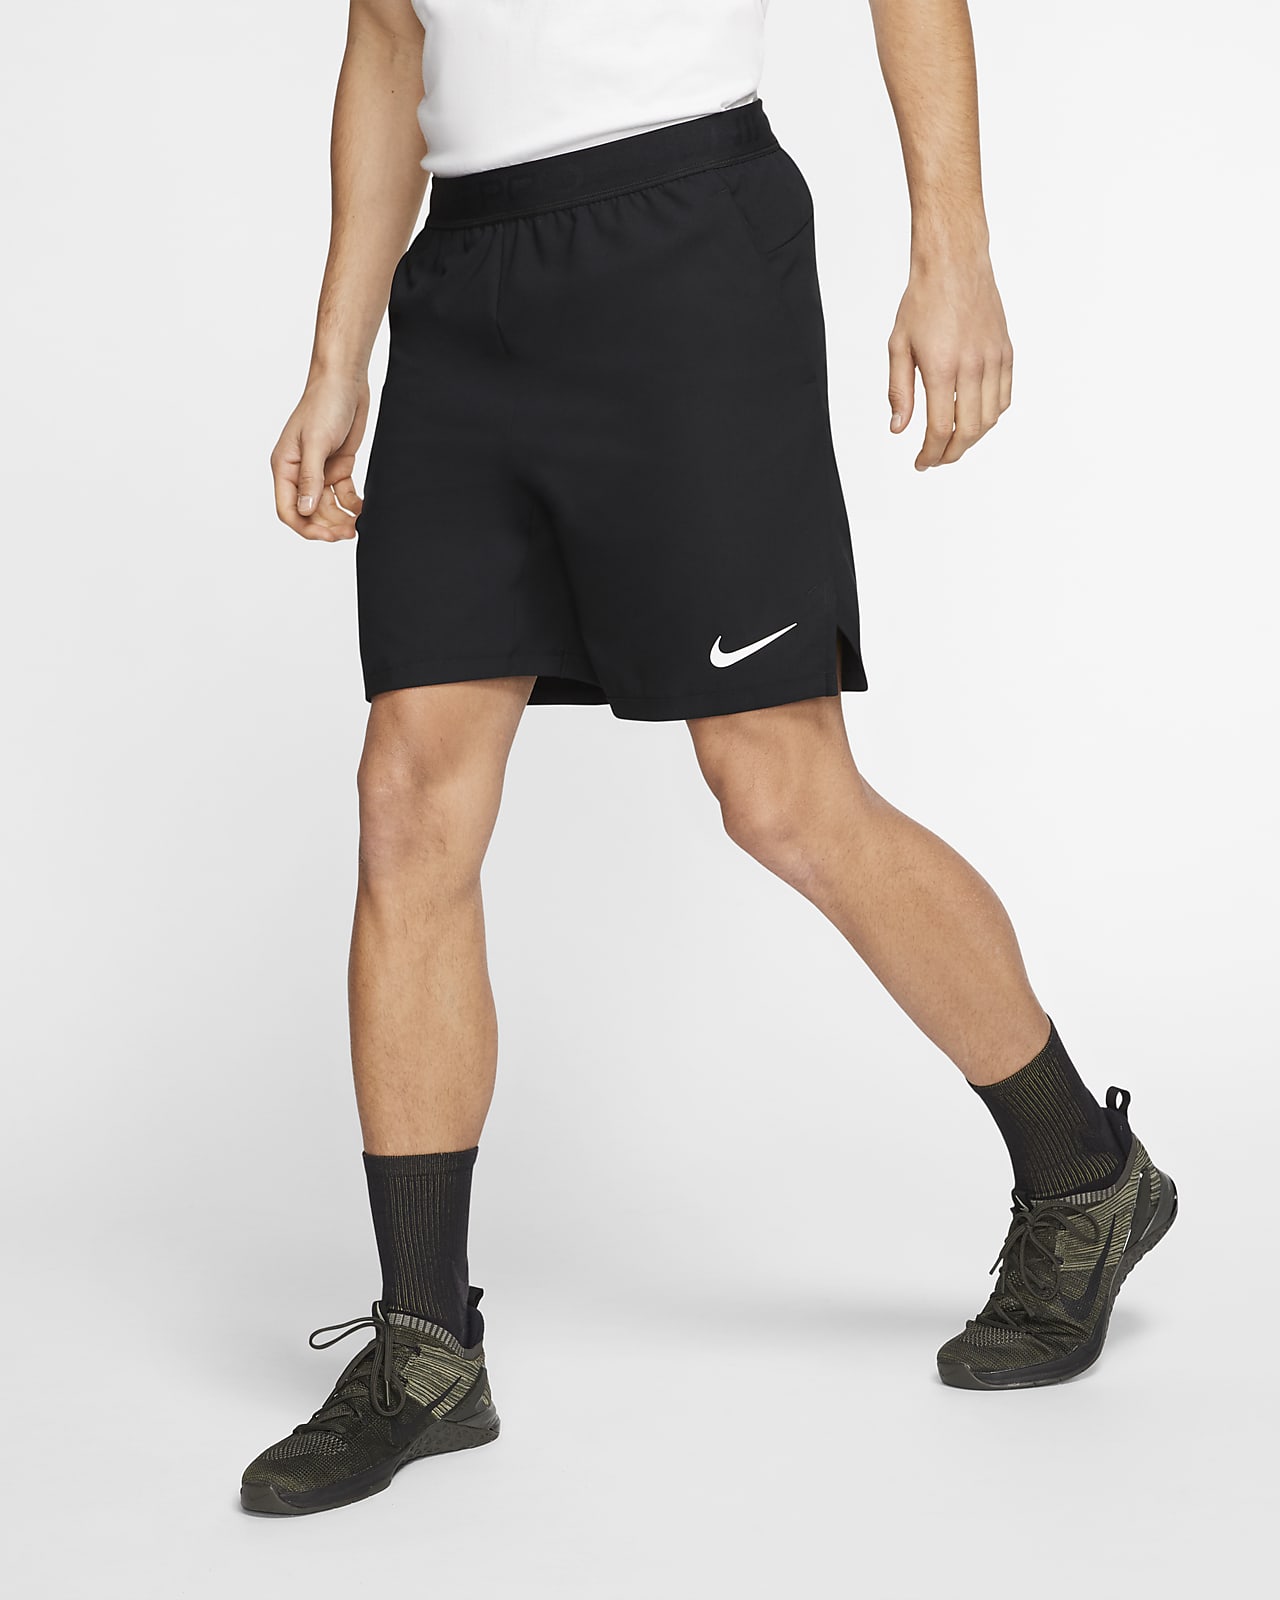 Pensativo flauta apoyo Nike Pro Flex Vent Max Pantalón corto - Hombre. Nike ES